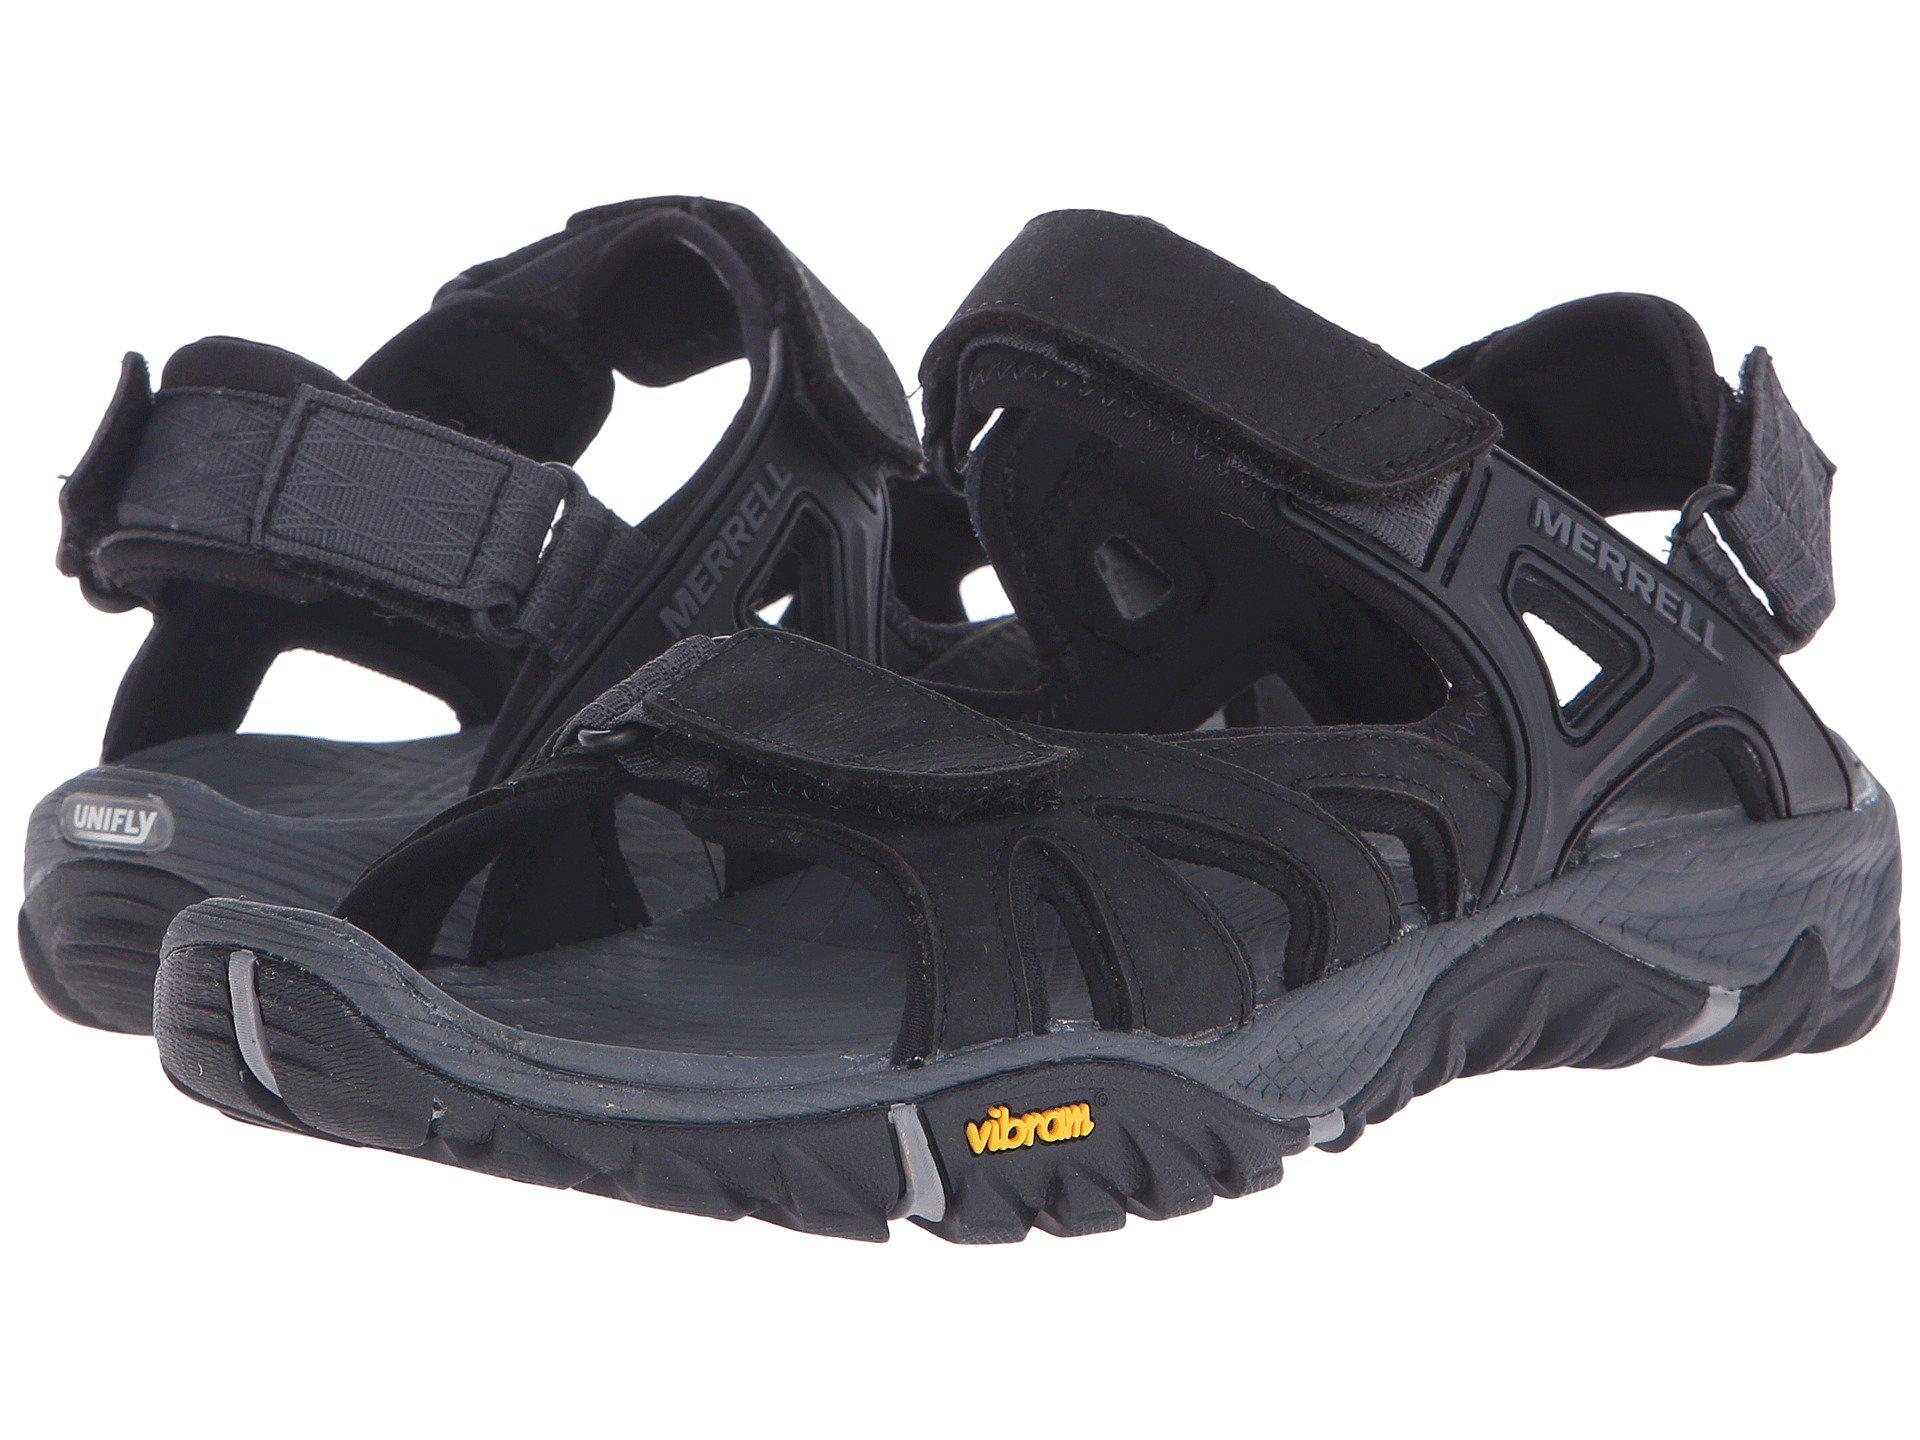 Merrell Neoprene All Out Blaze Sieve Convert Hiking Sandals in Black for  Men - Save 61% - Lyst